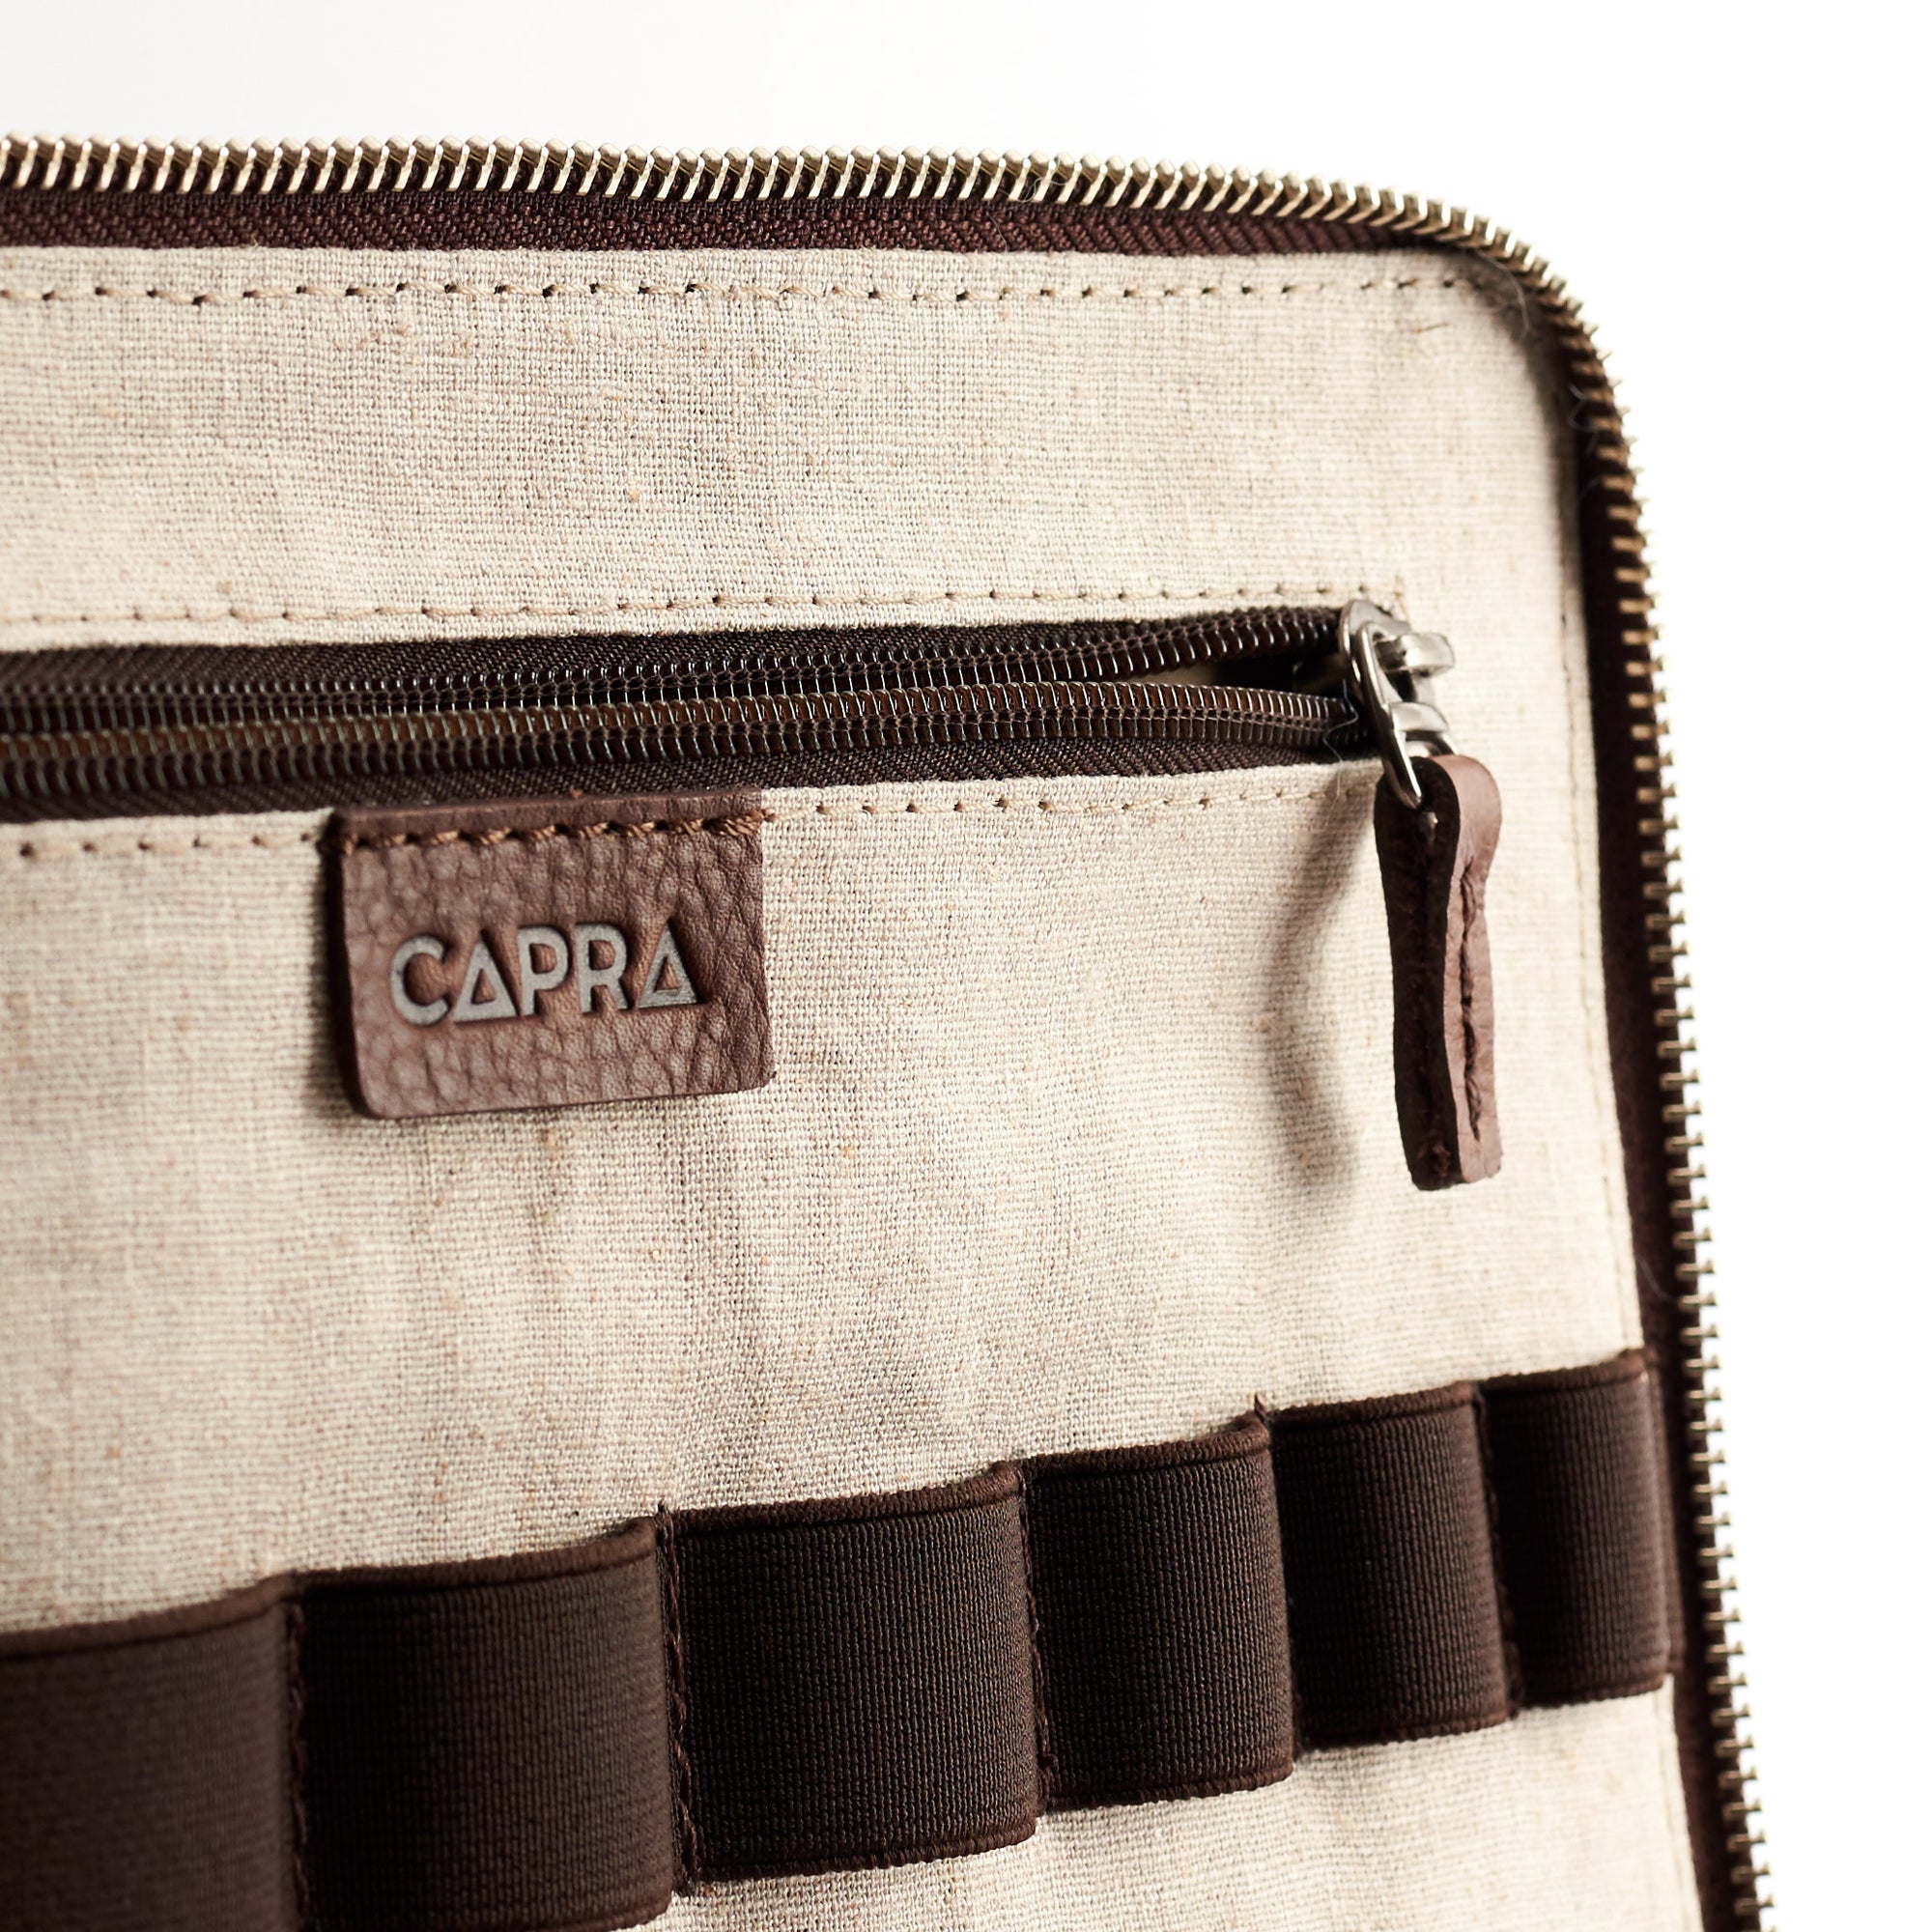 Organization elastic slots. Brown EDC edc bag essentials. Tech bag organizer by Capra Leather